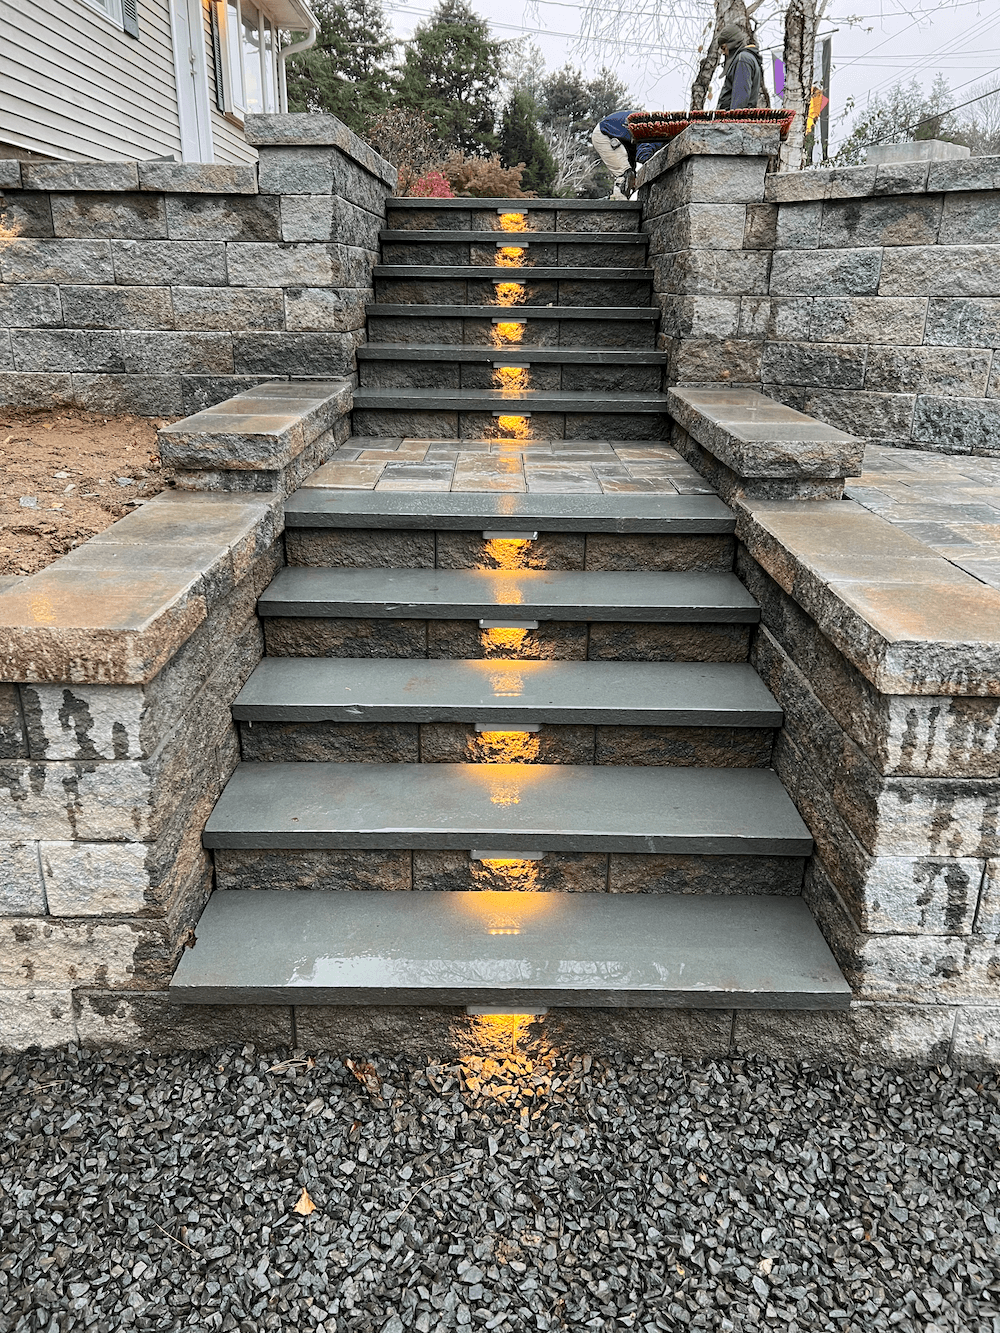 Block stairs with lighting. Daytime 